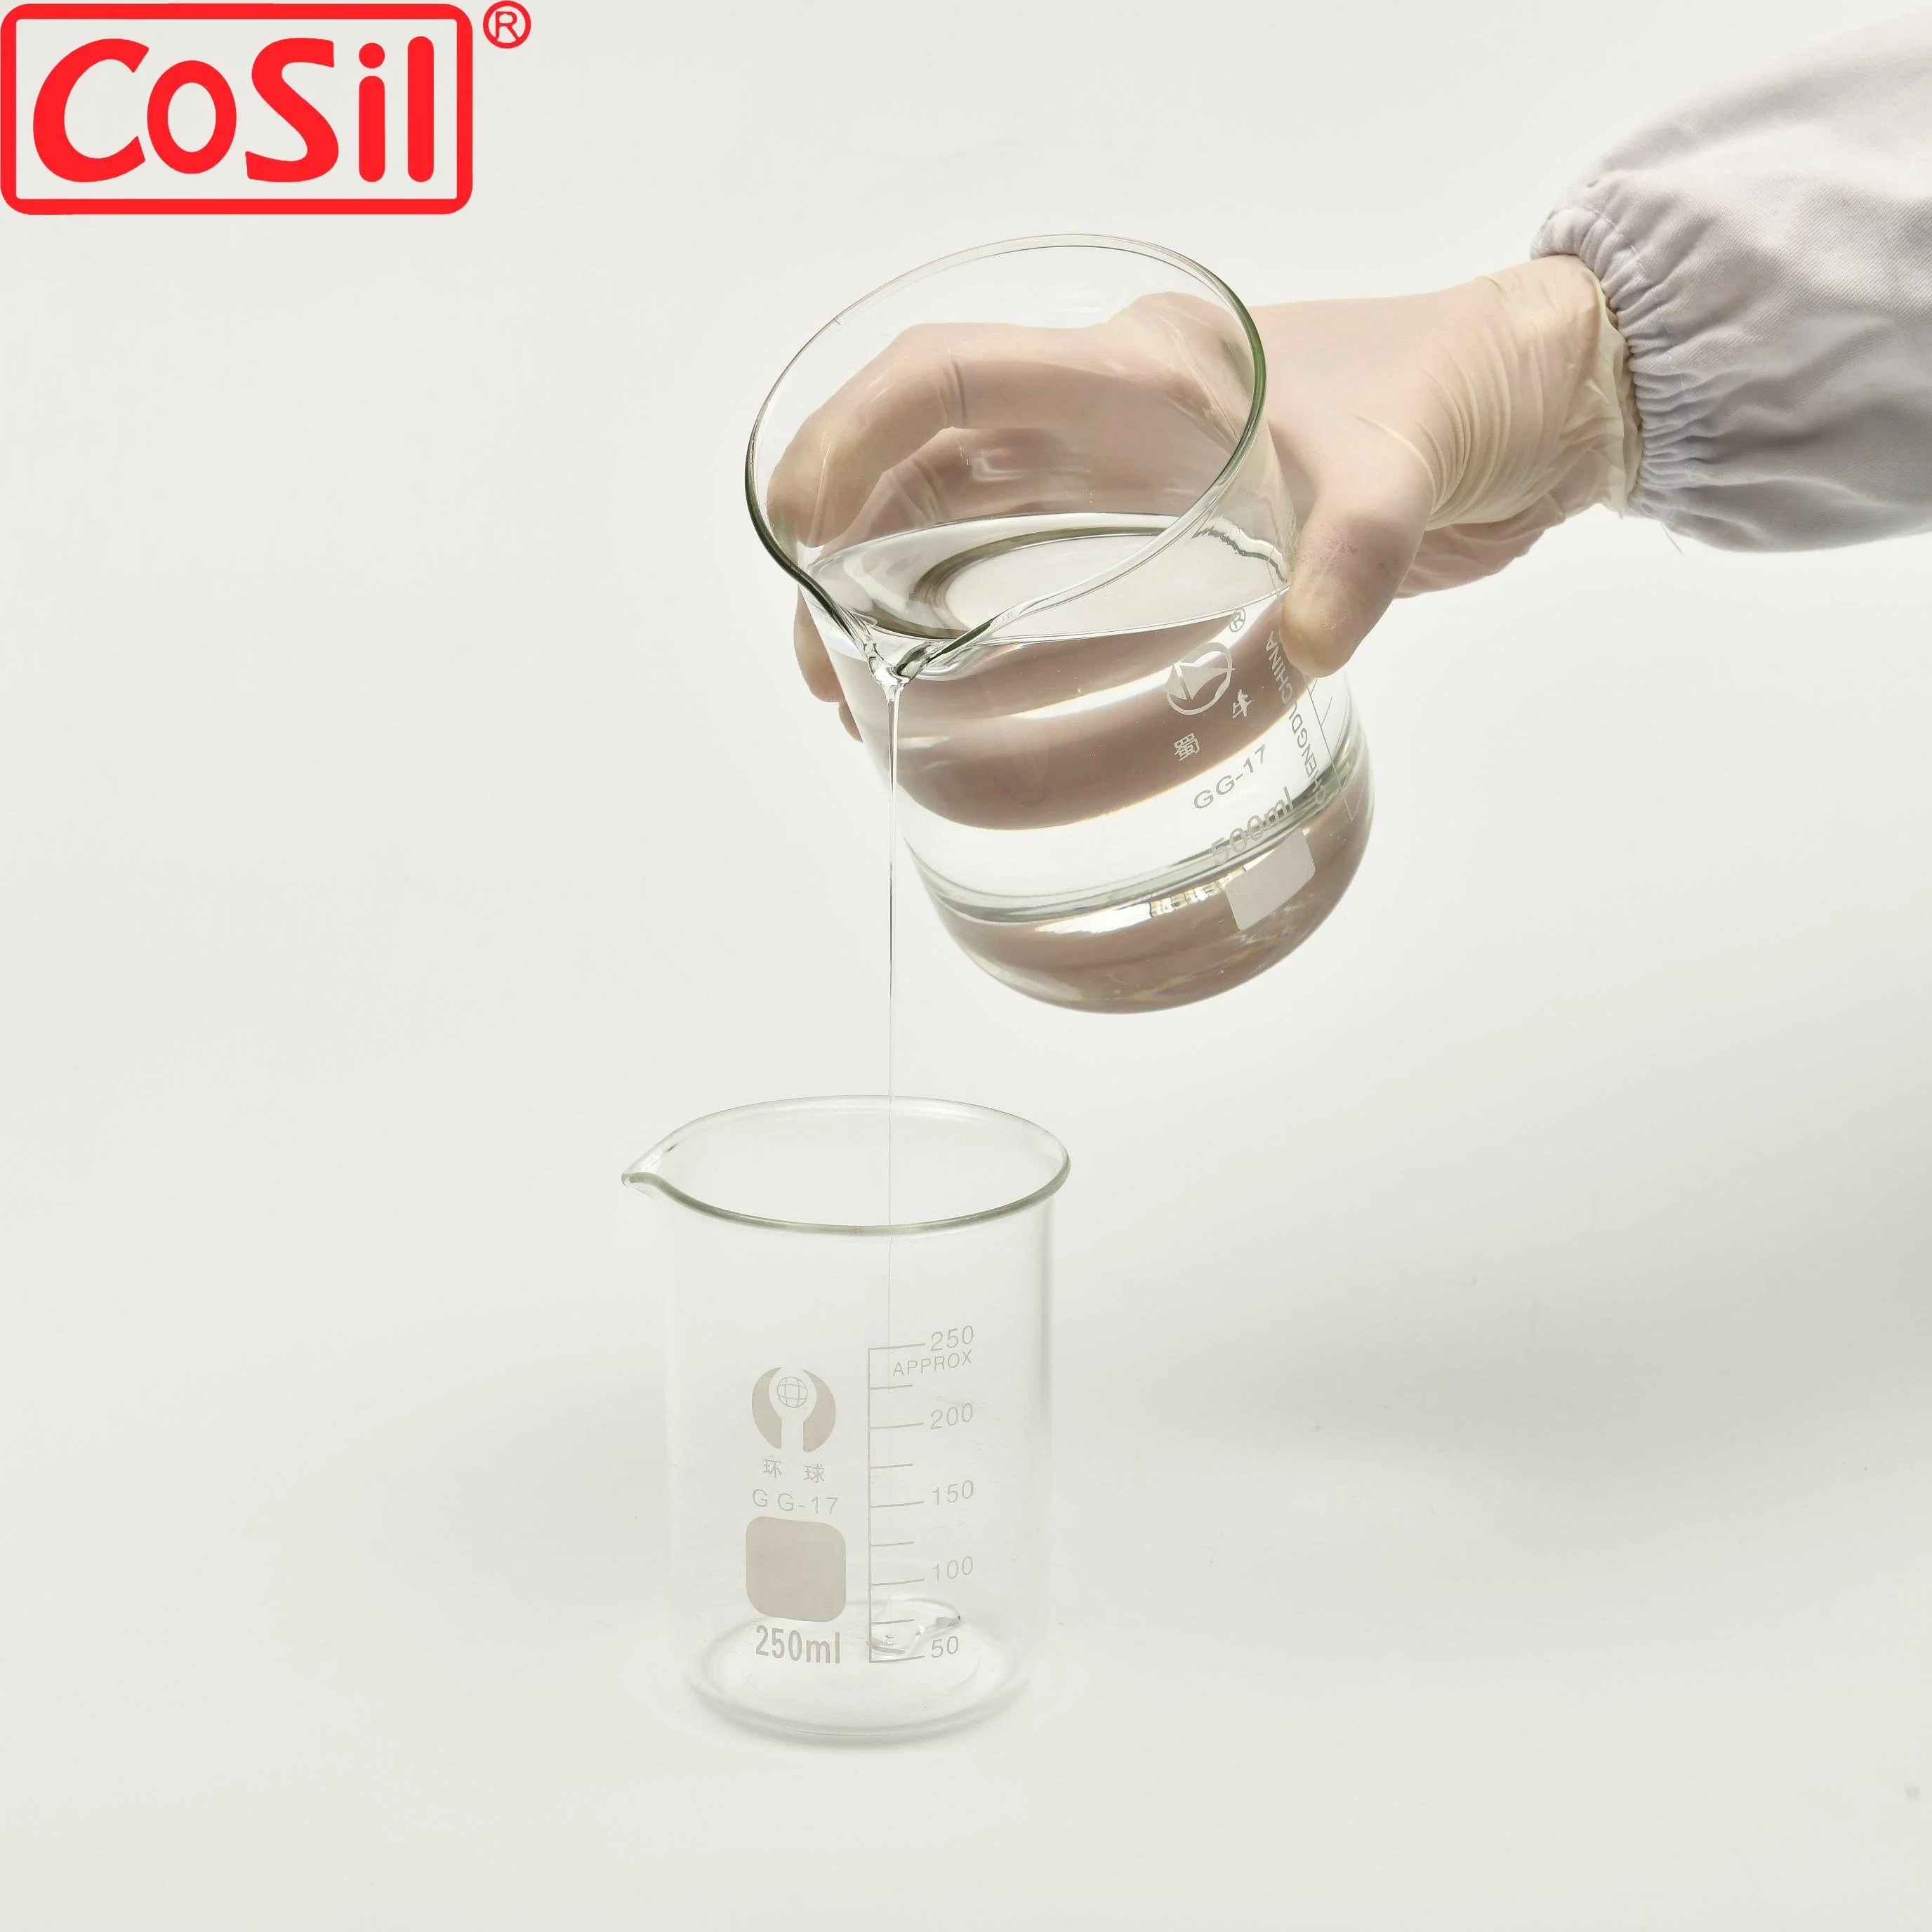 Виниловый герметизирующий состав для полидиметилсилоксана Liquid 1000cst Silicone Oil Sealant